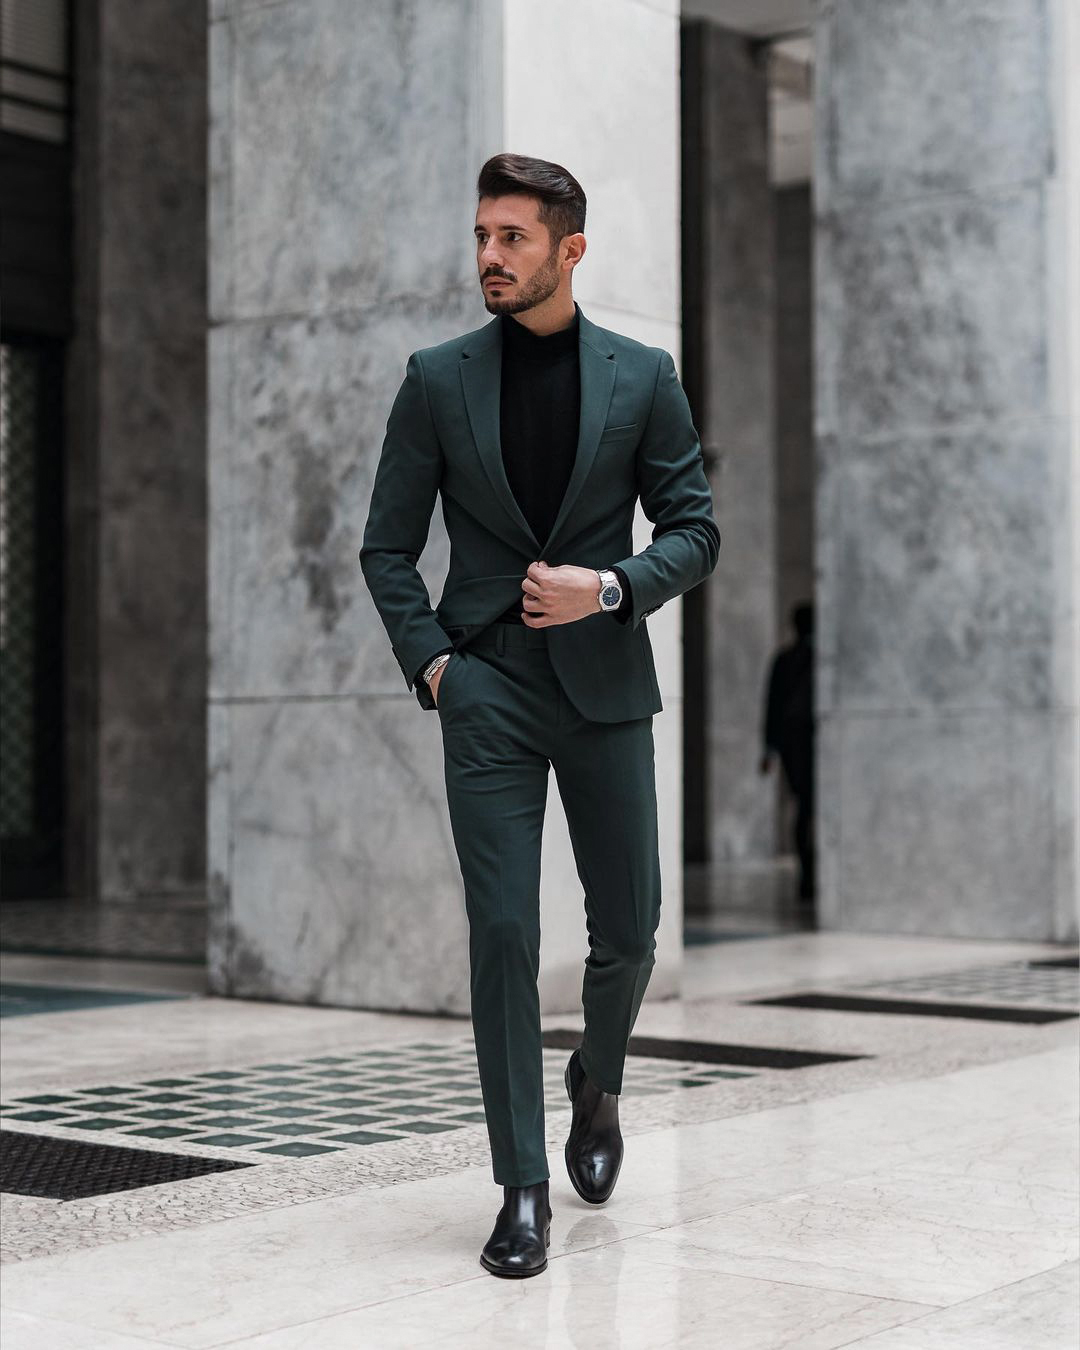 Dark Green Suits Tend To Look Formal 